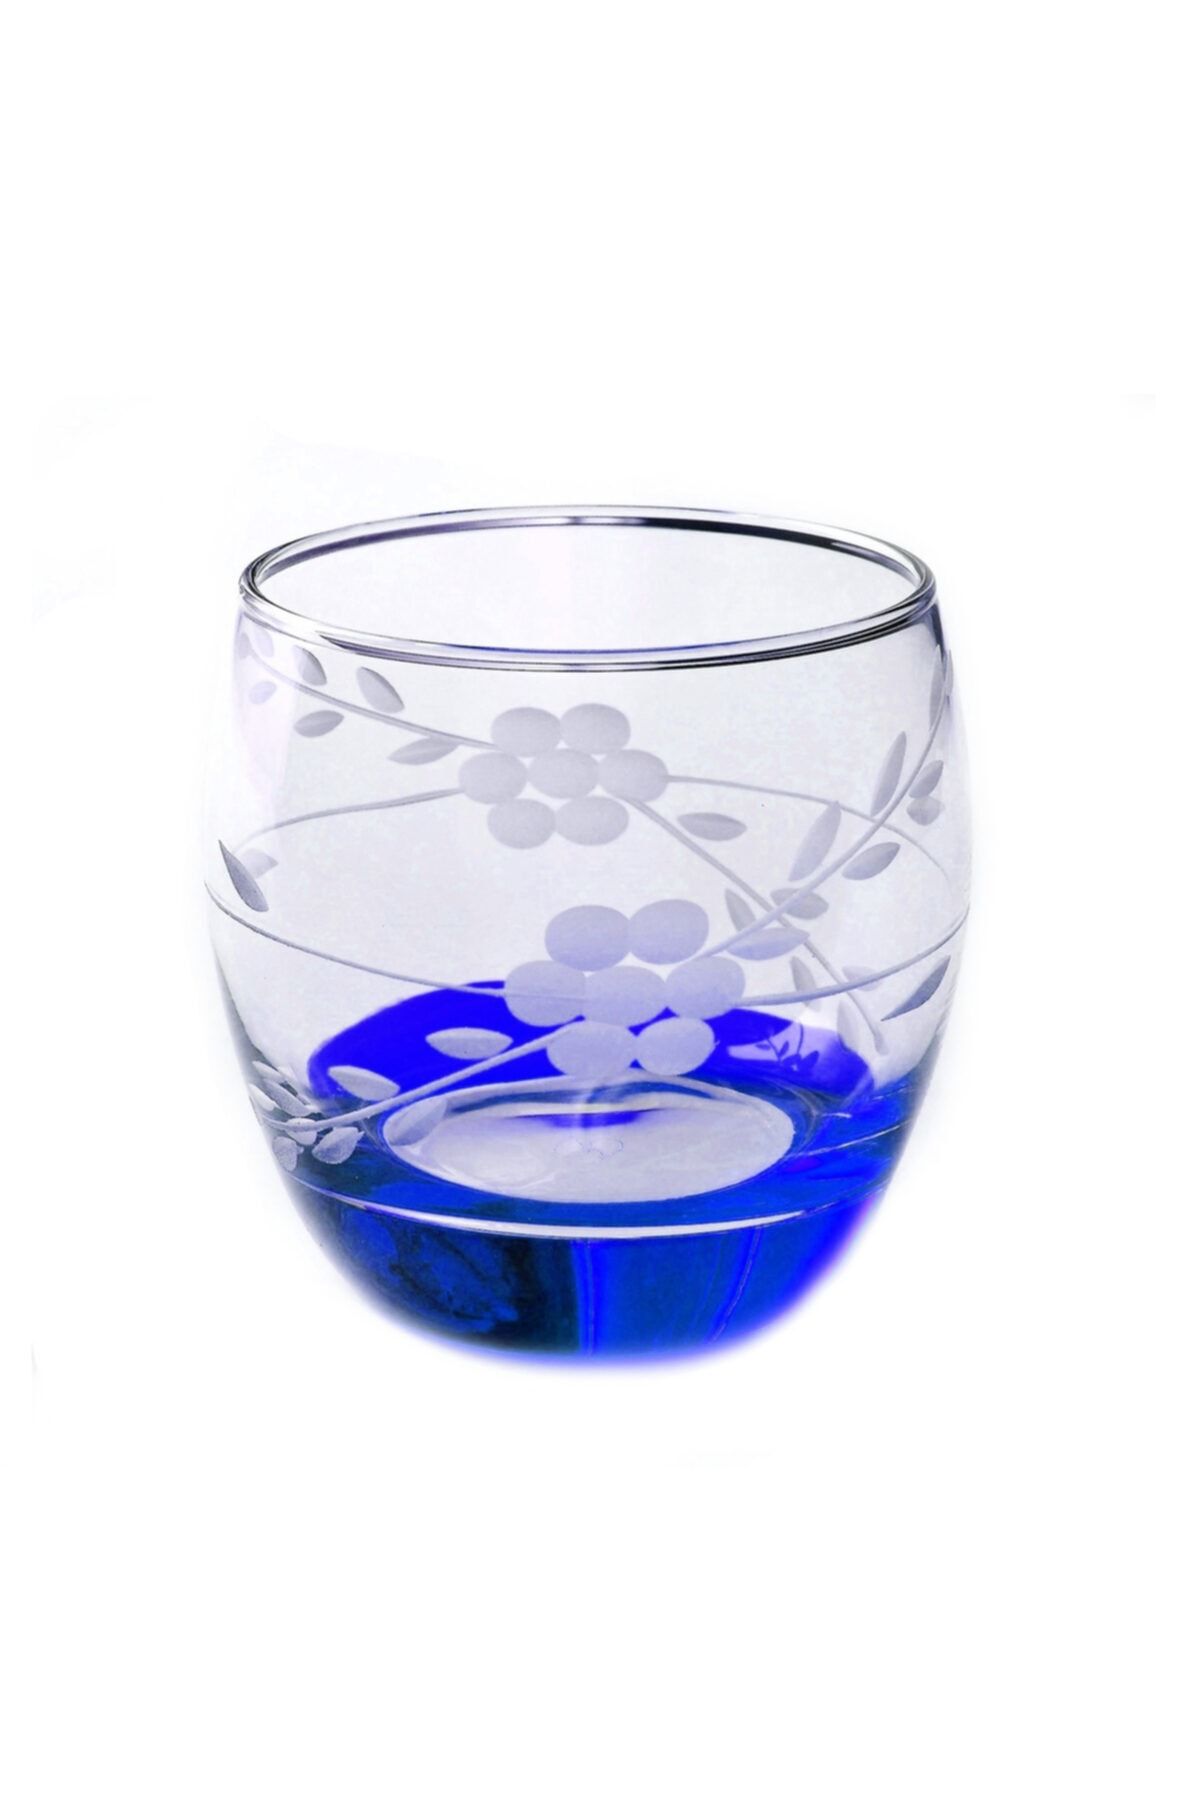 BAŞAK Paşabahçe 41010 Papatya Mavi Barel Su-meşrubat Bardağı 6 Adet